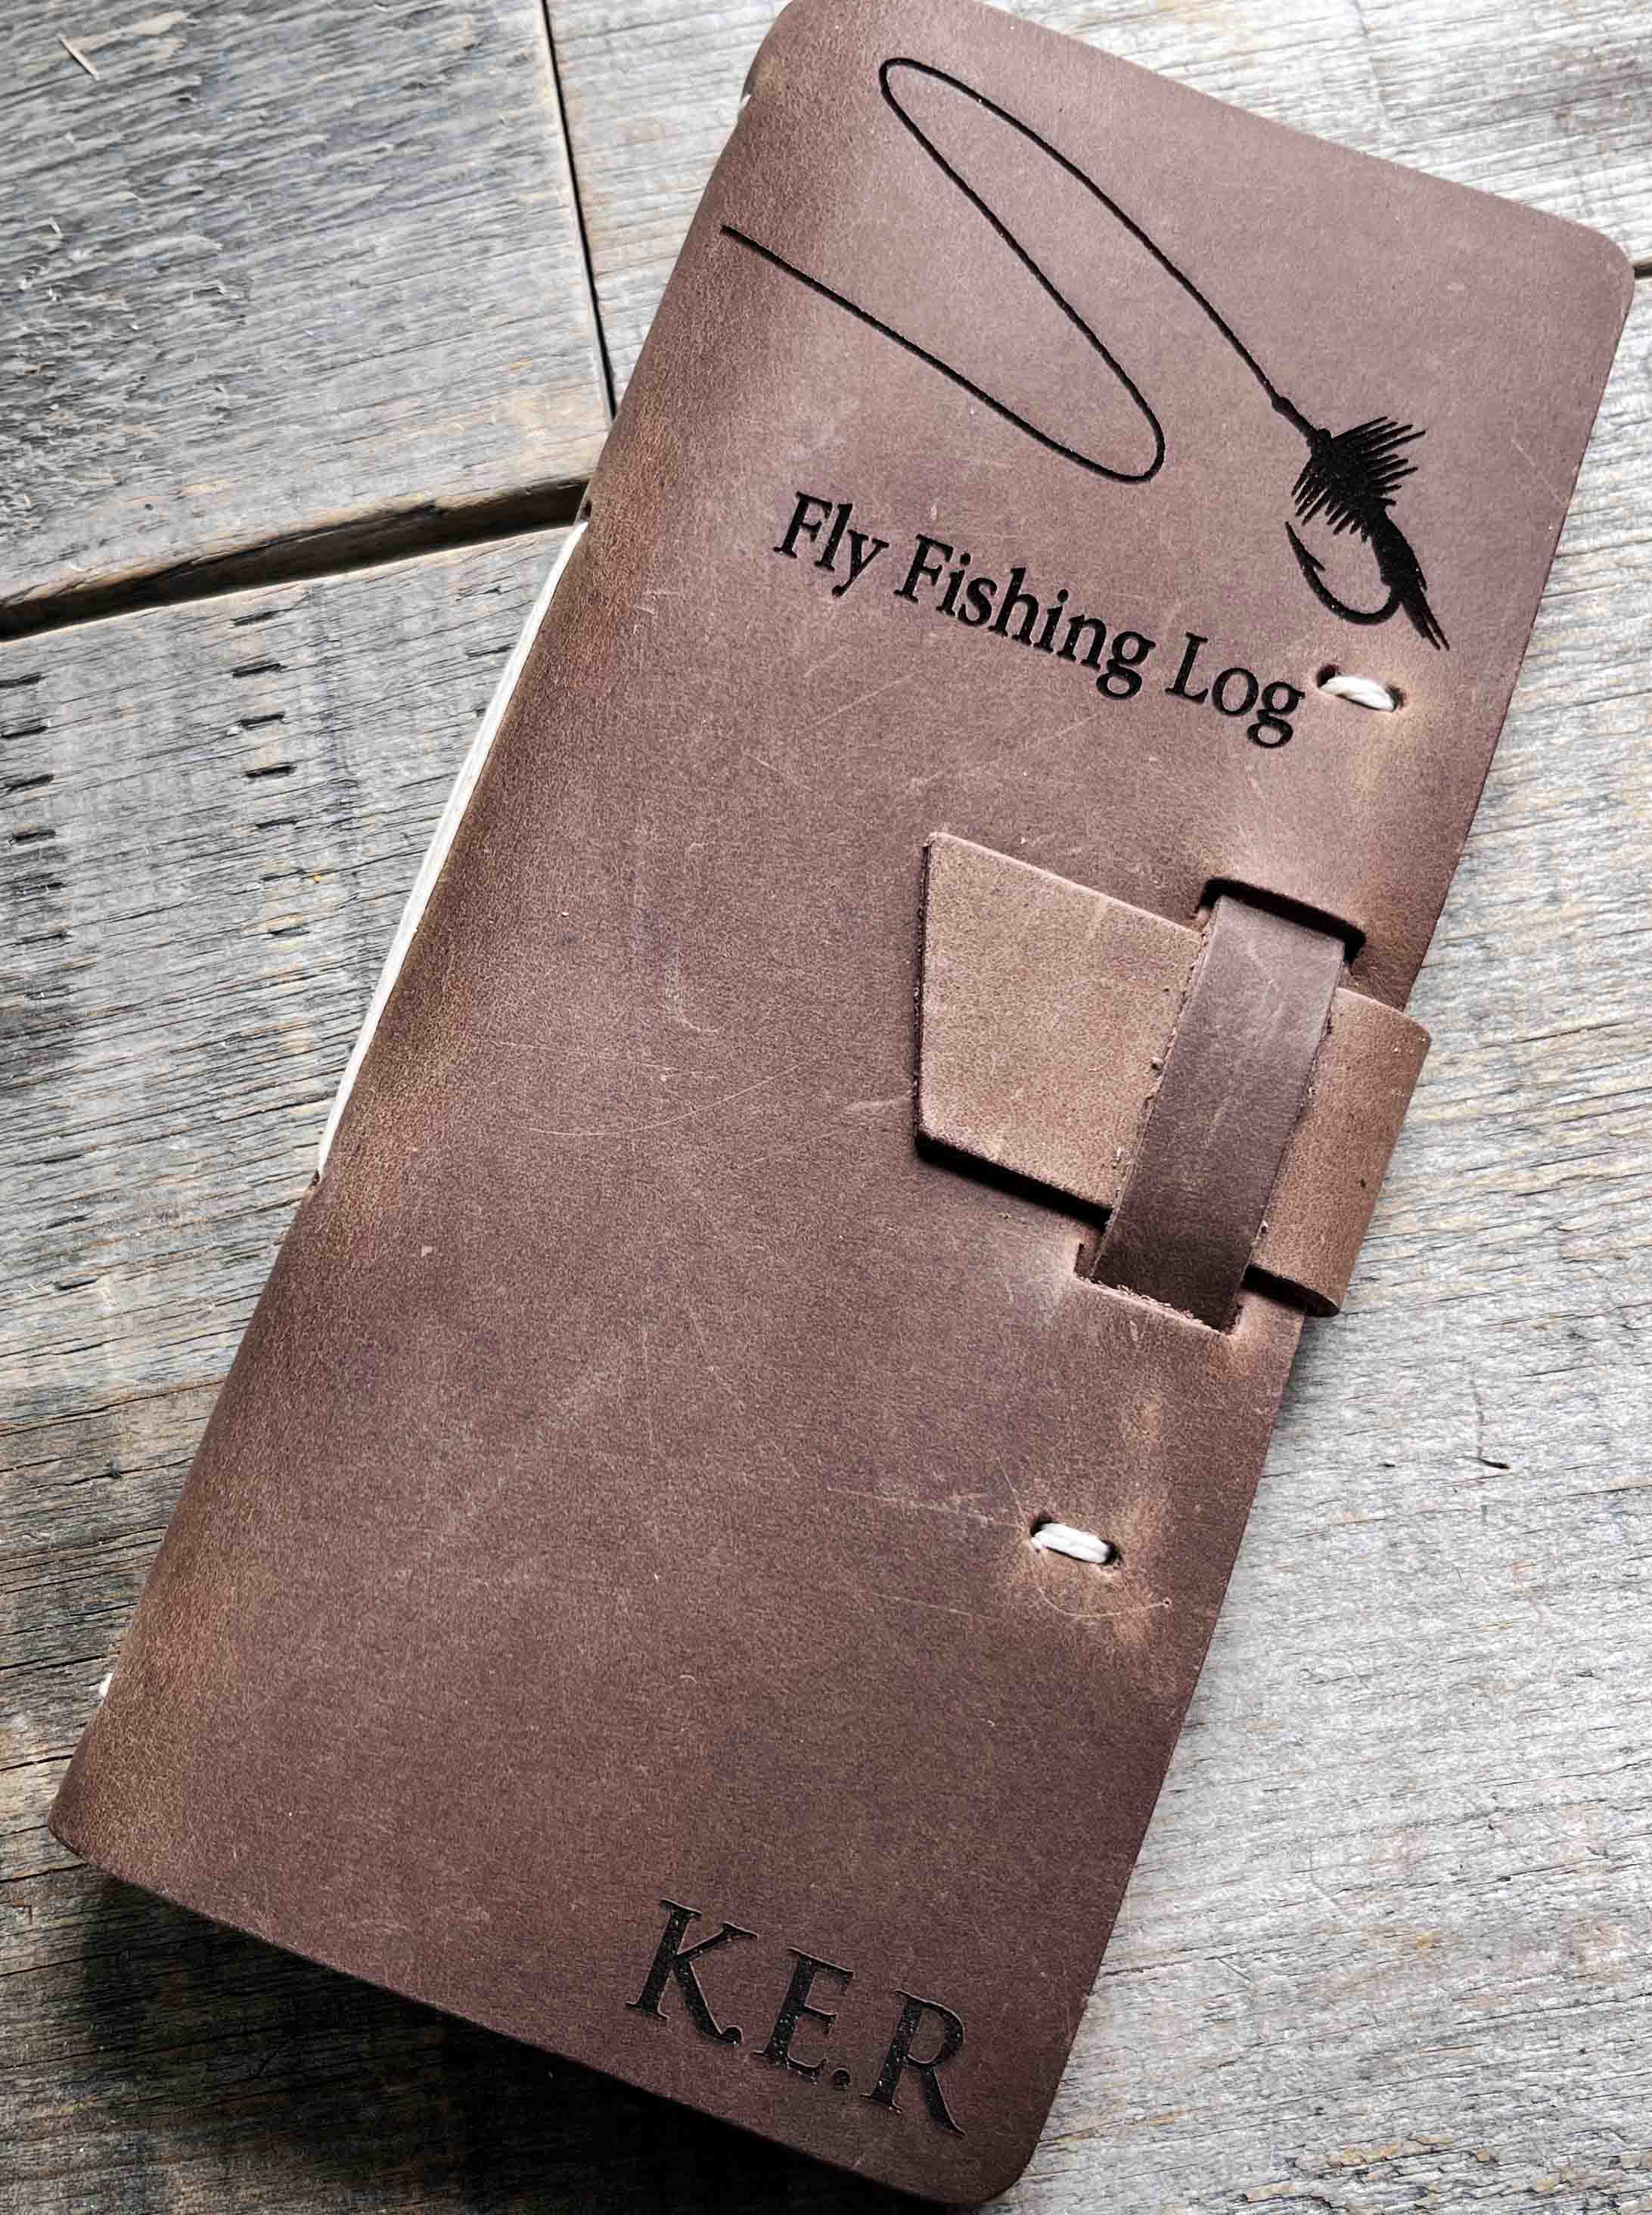 Fishing Log Premium Leather Engraved